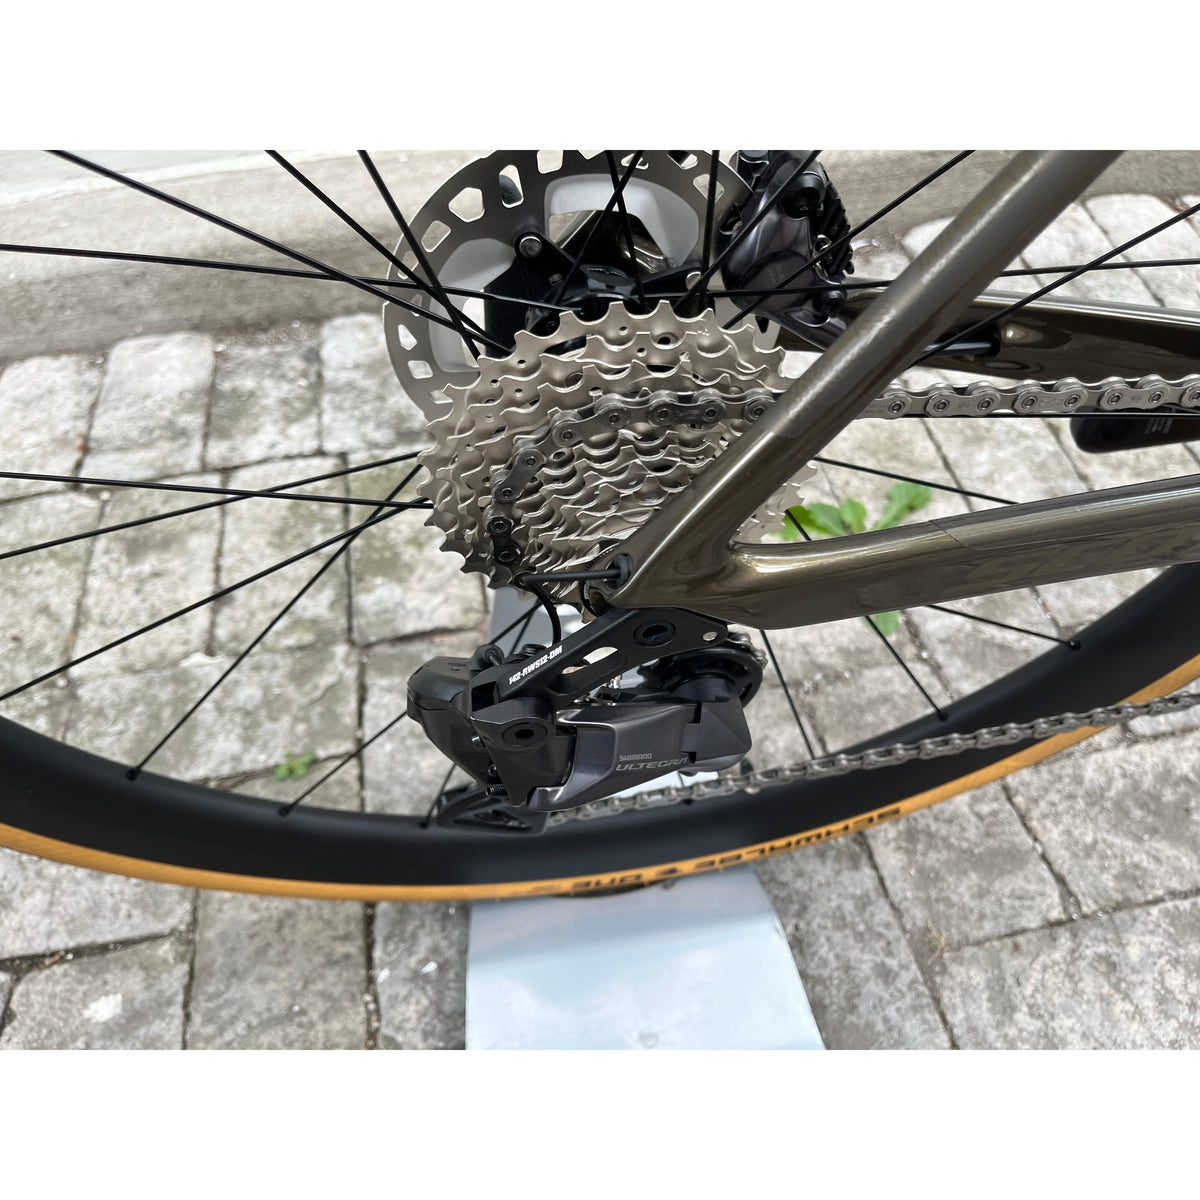 Scott Foil Premium Disc - Shimano Ultegra 8100 Road Bike - Custom Build